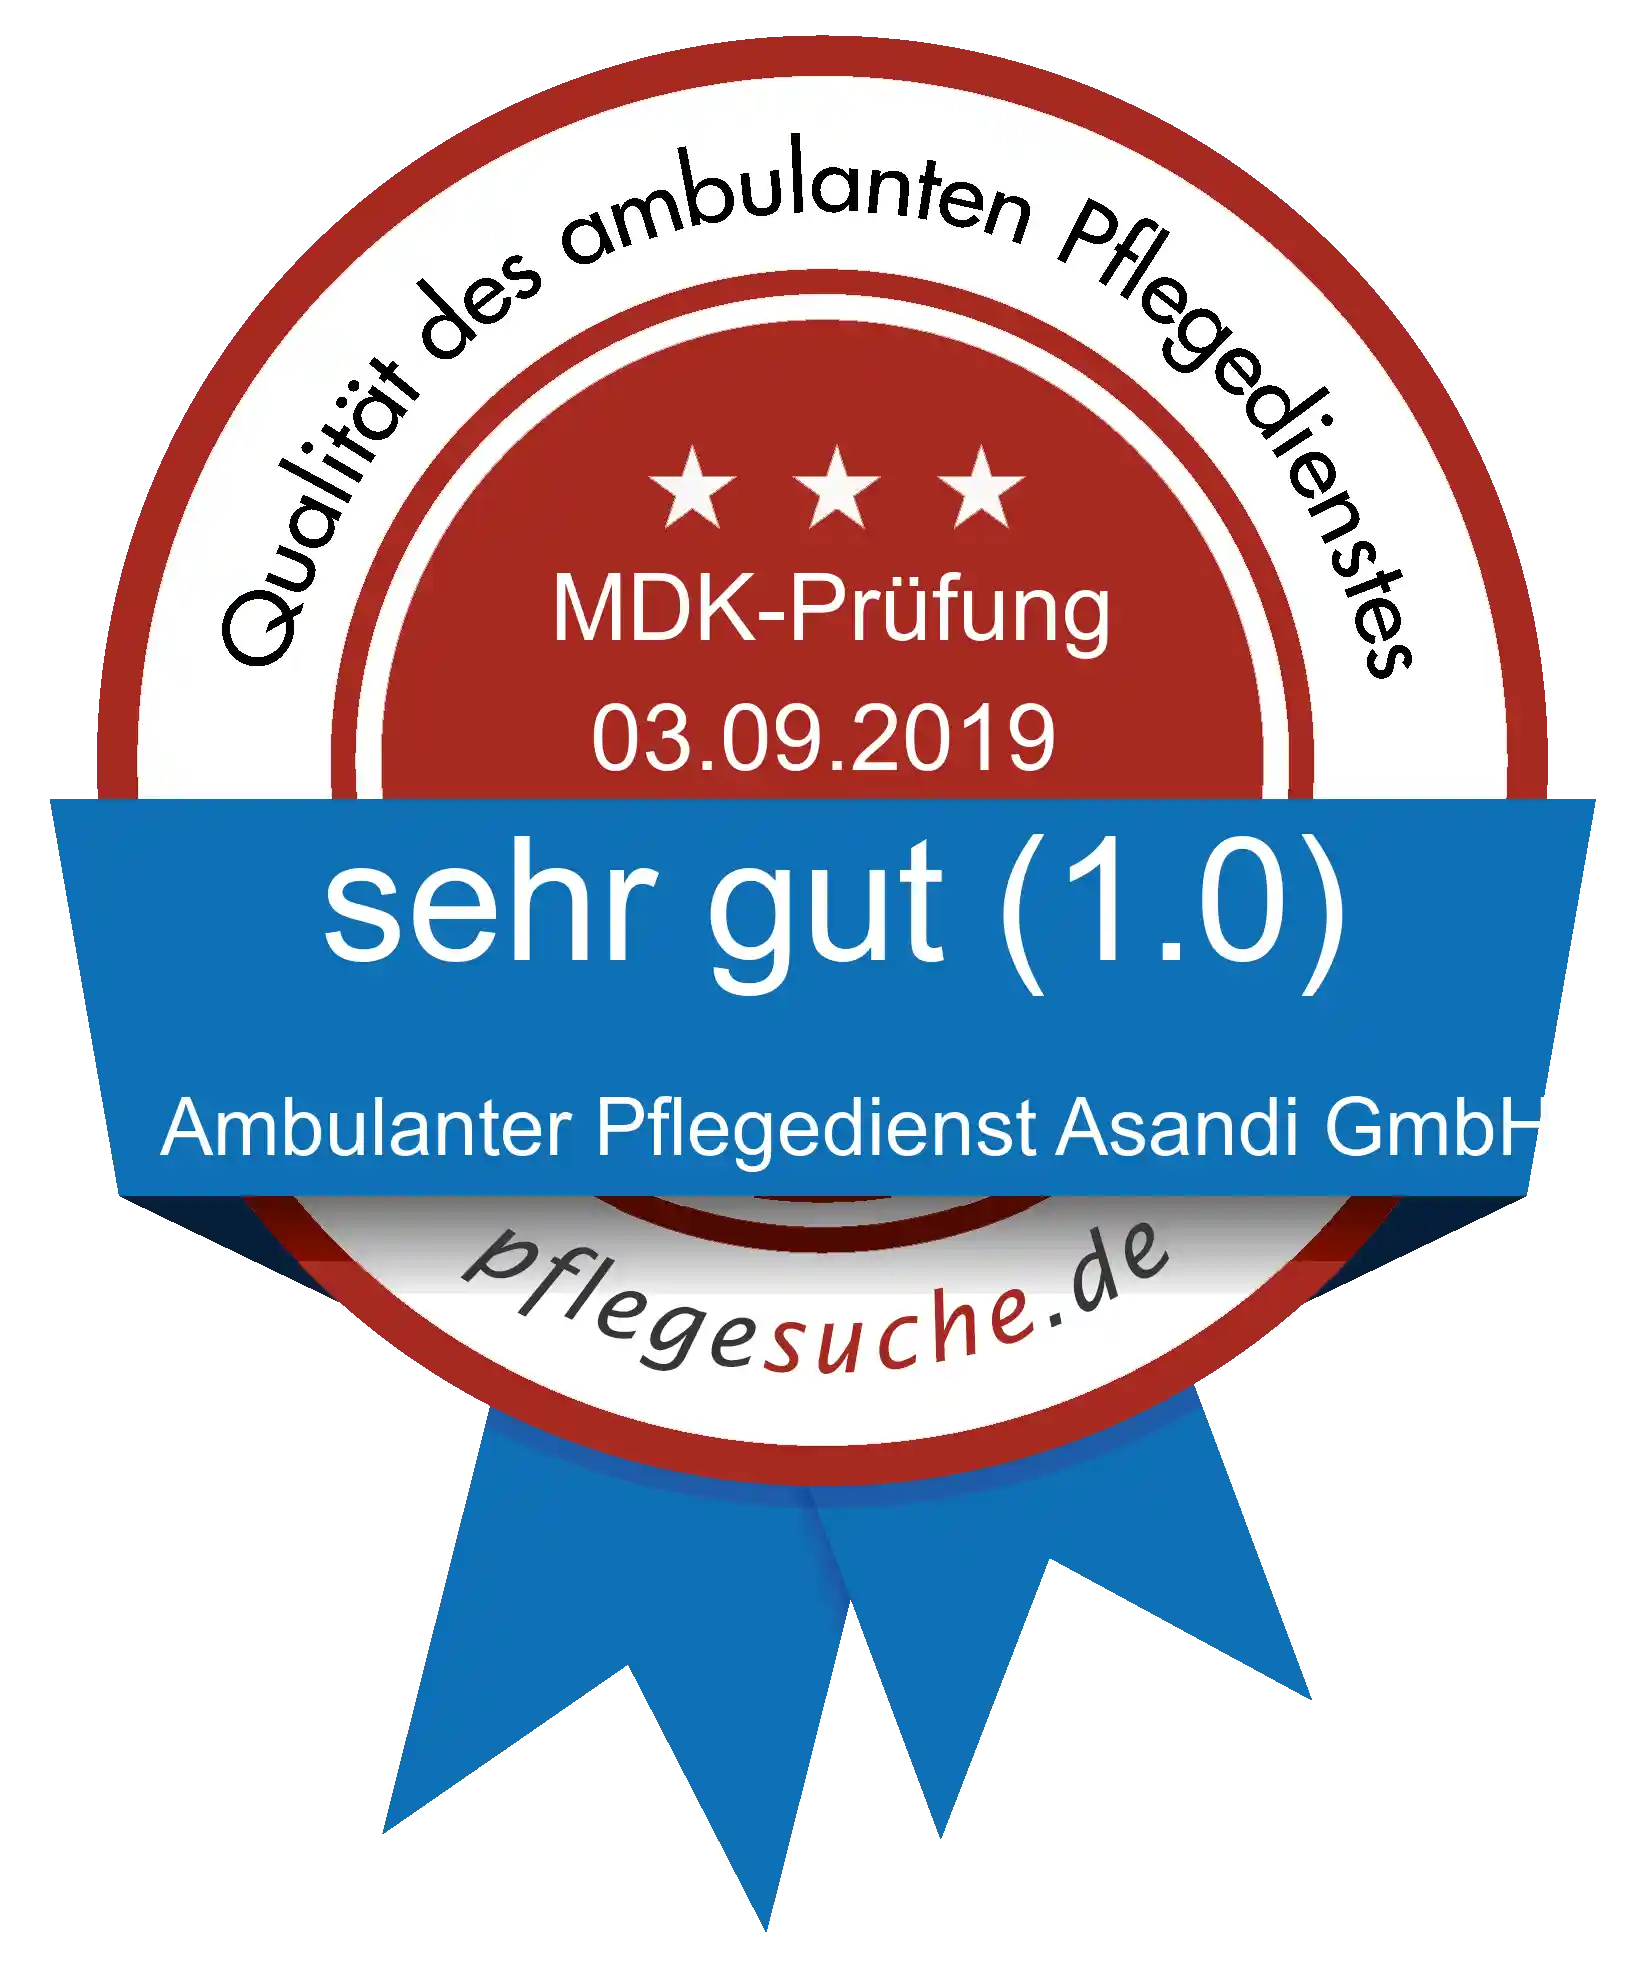 Siegel Benotung: Ambulanter Pflegedienst Asandi GmbH